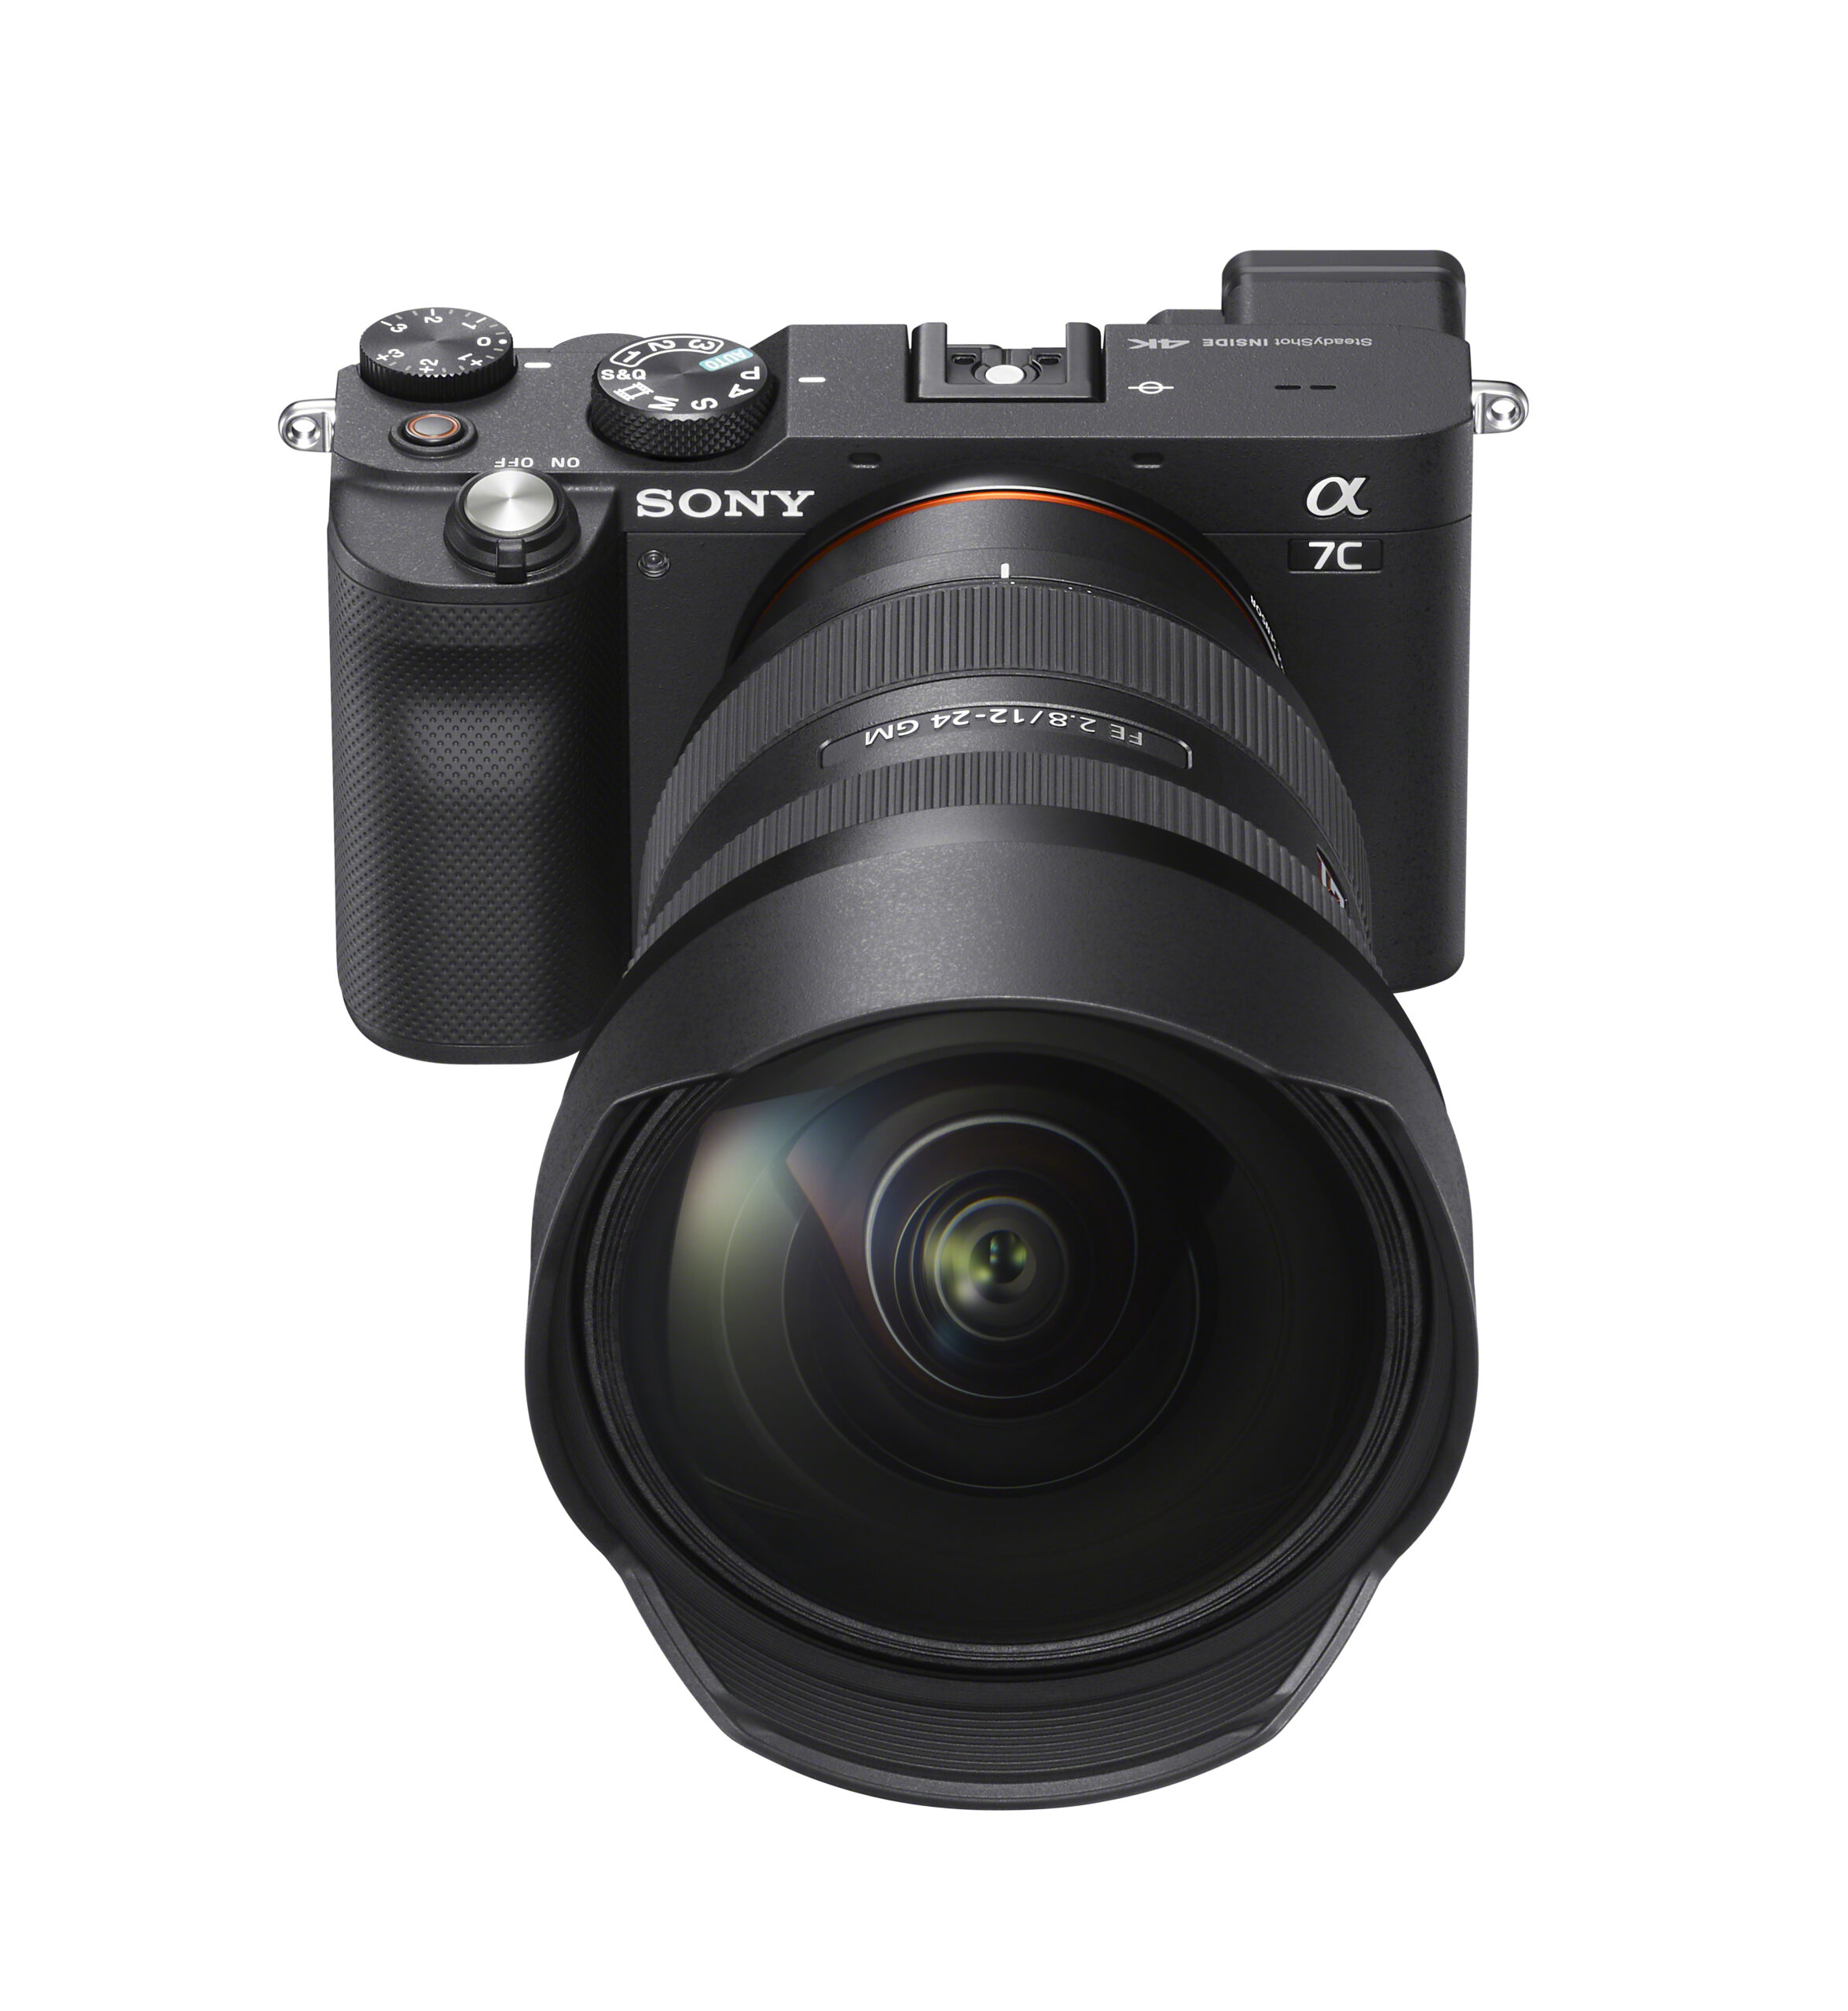 Efectivamente tifón llamar Sony built a tiny mirrorless camera with a full-frame sensor inside